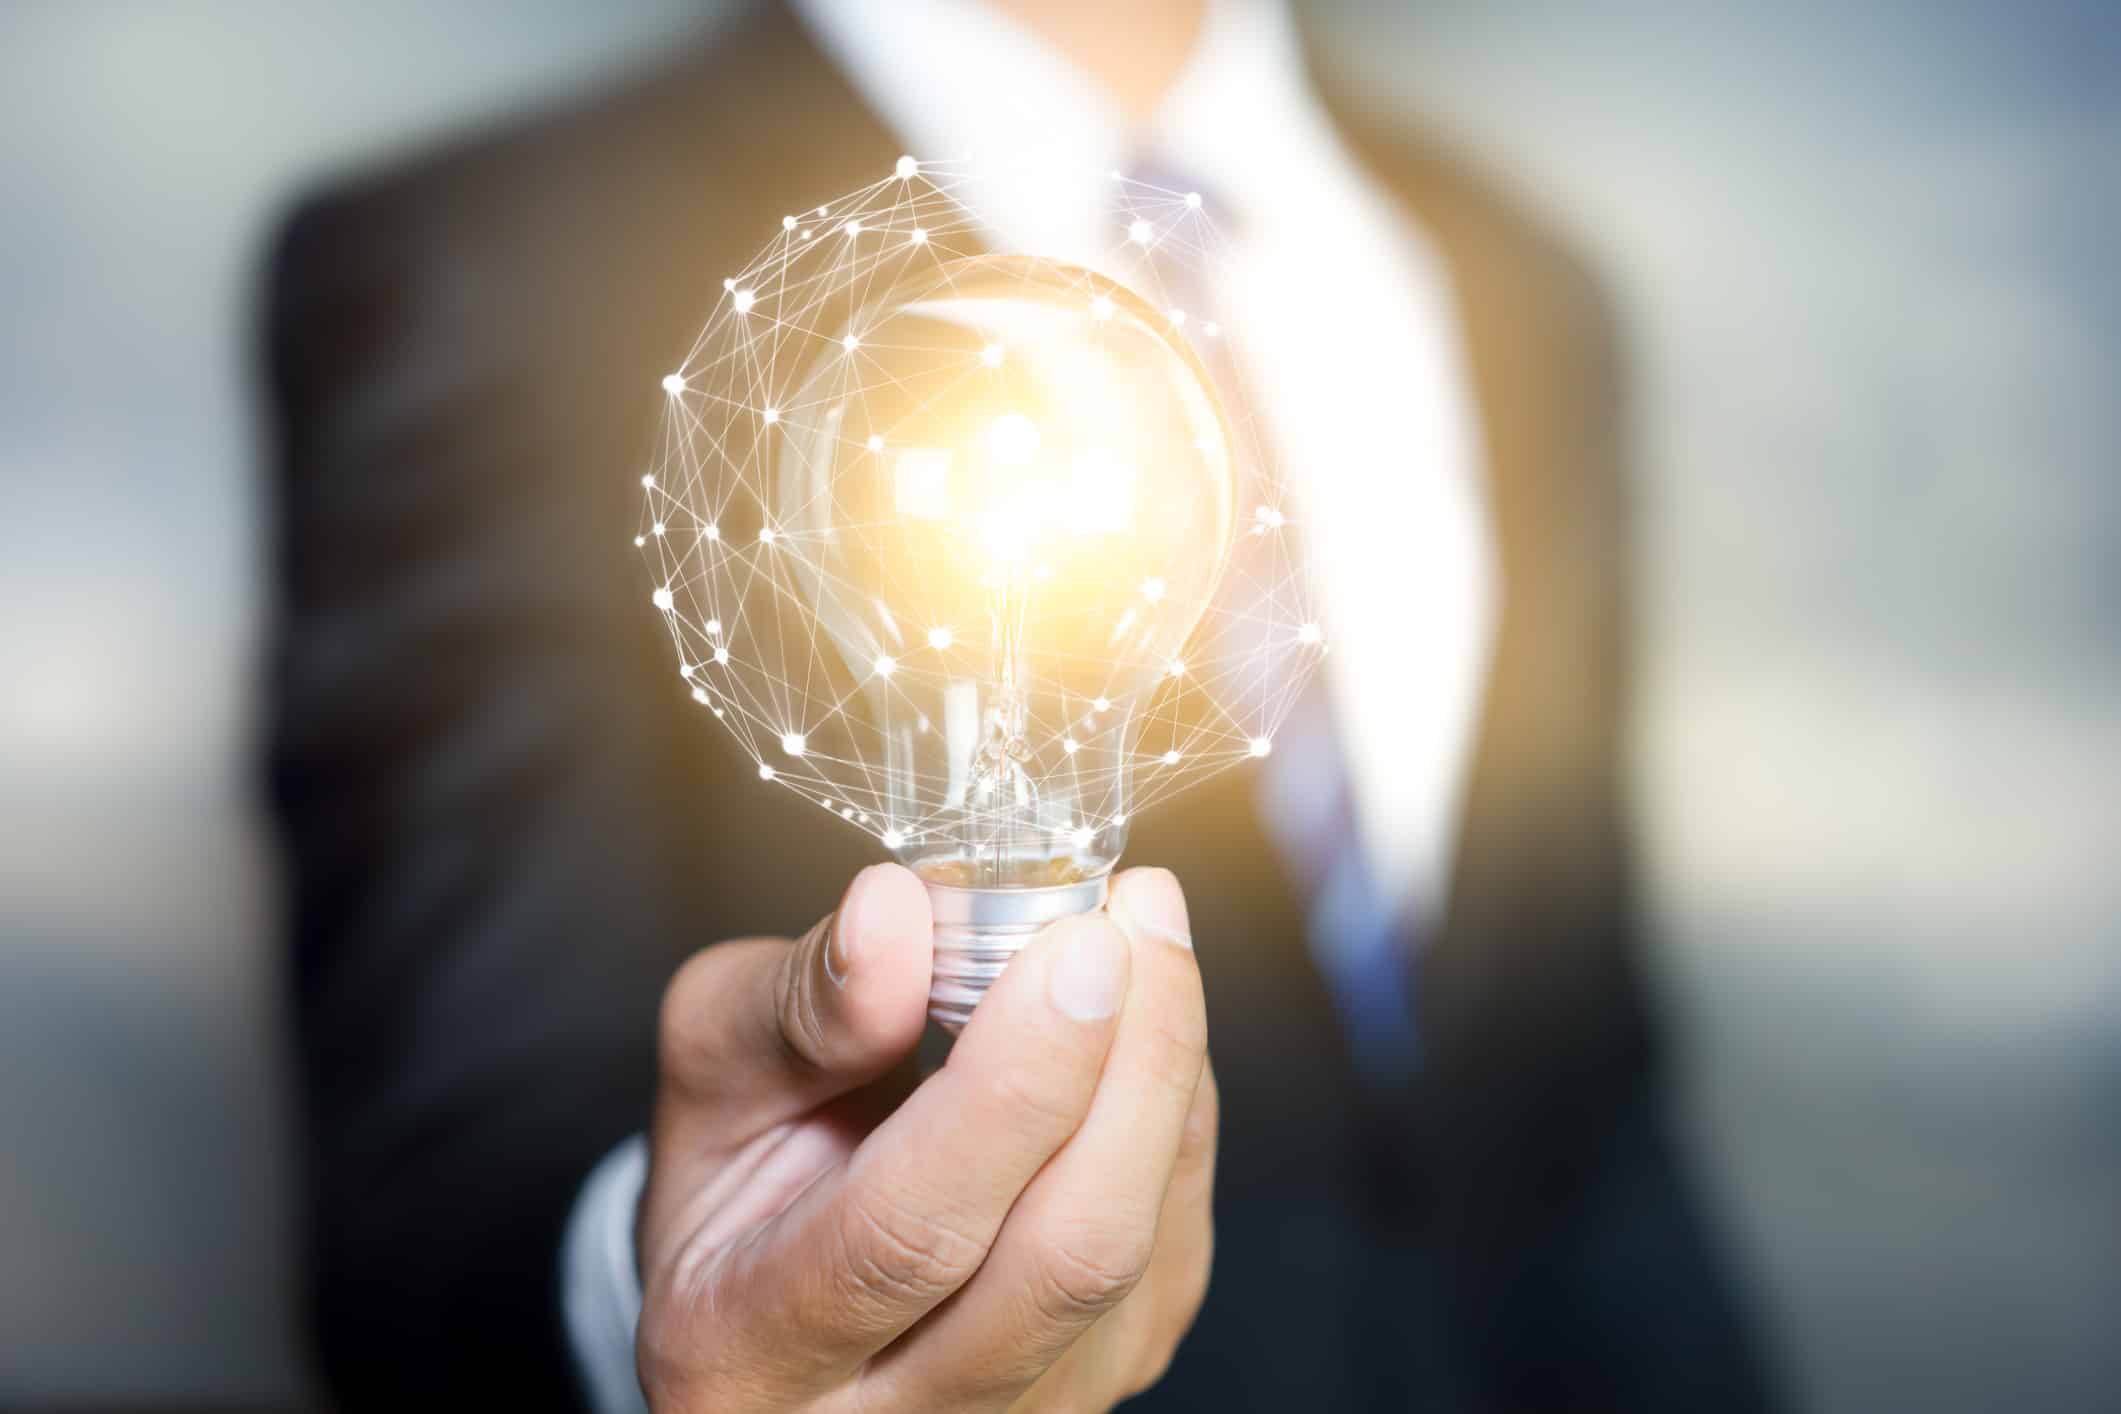 Hand Of Businessman Holding Illuminated Light Bulb, Idea, Innovation And Inspiration Concept.